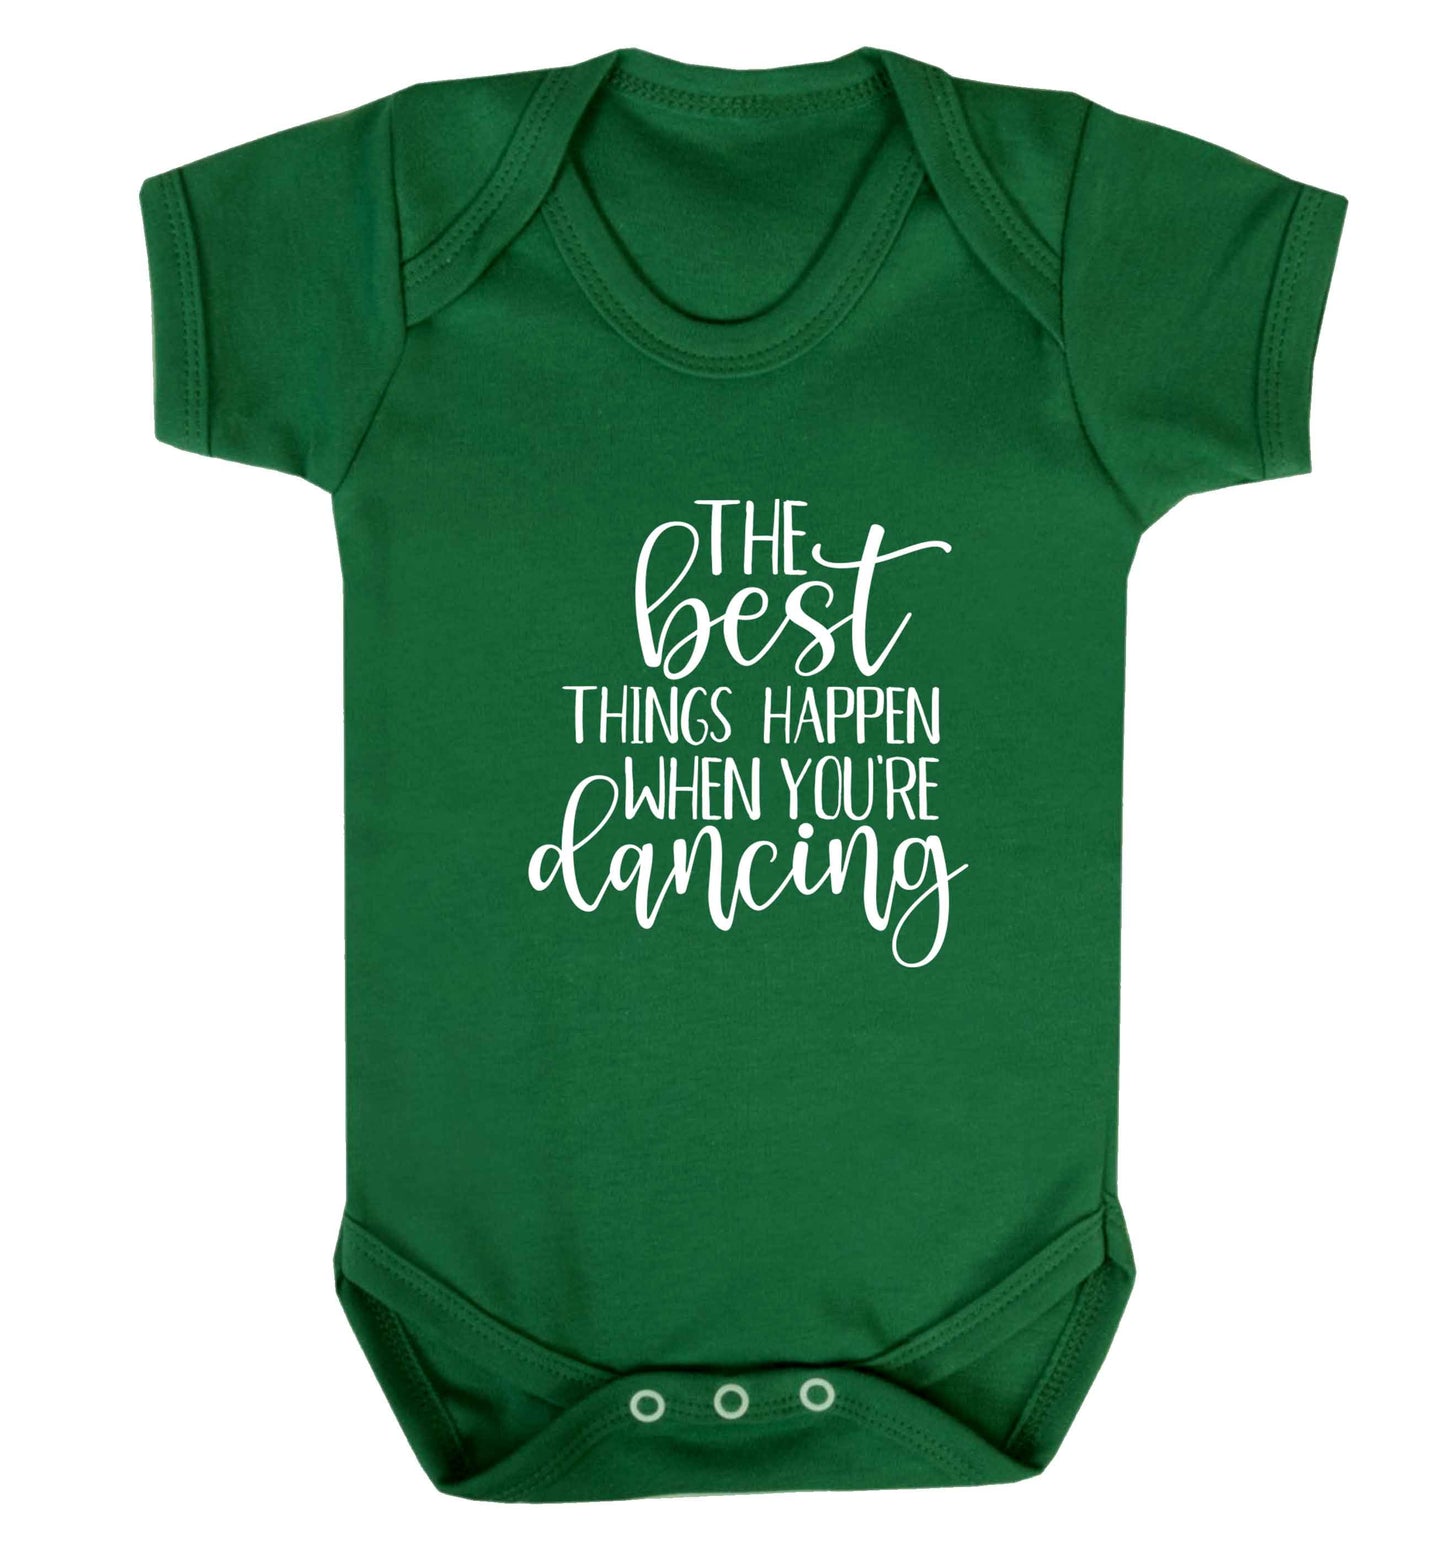 Best Things Happen Dancing baby vest green 18-24 months